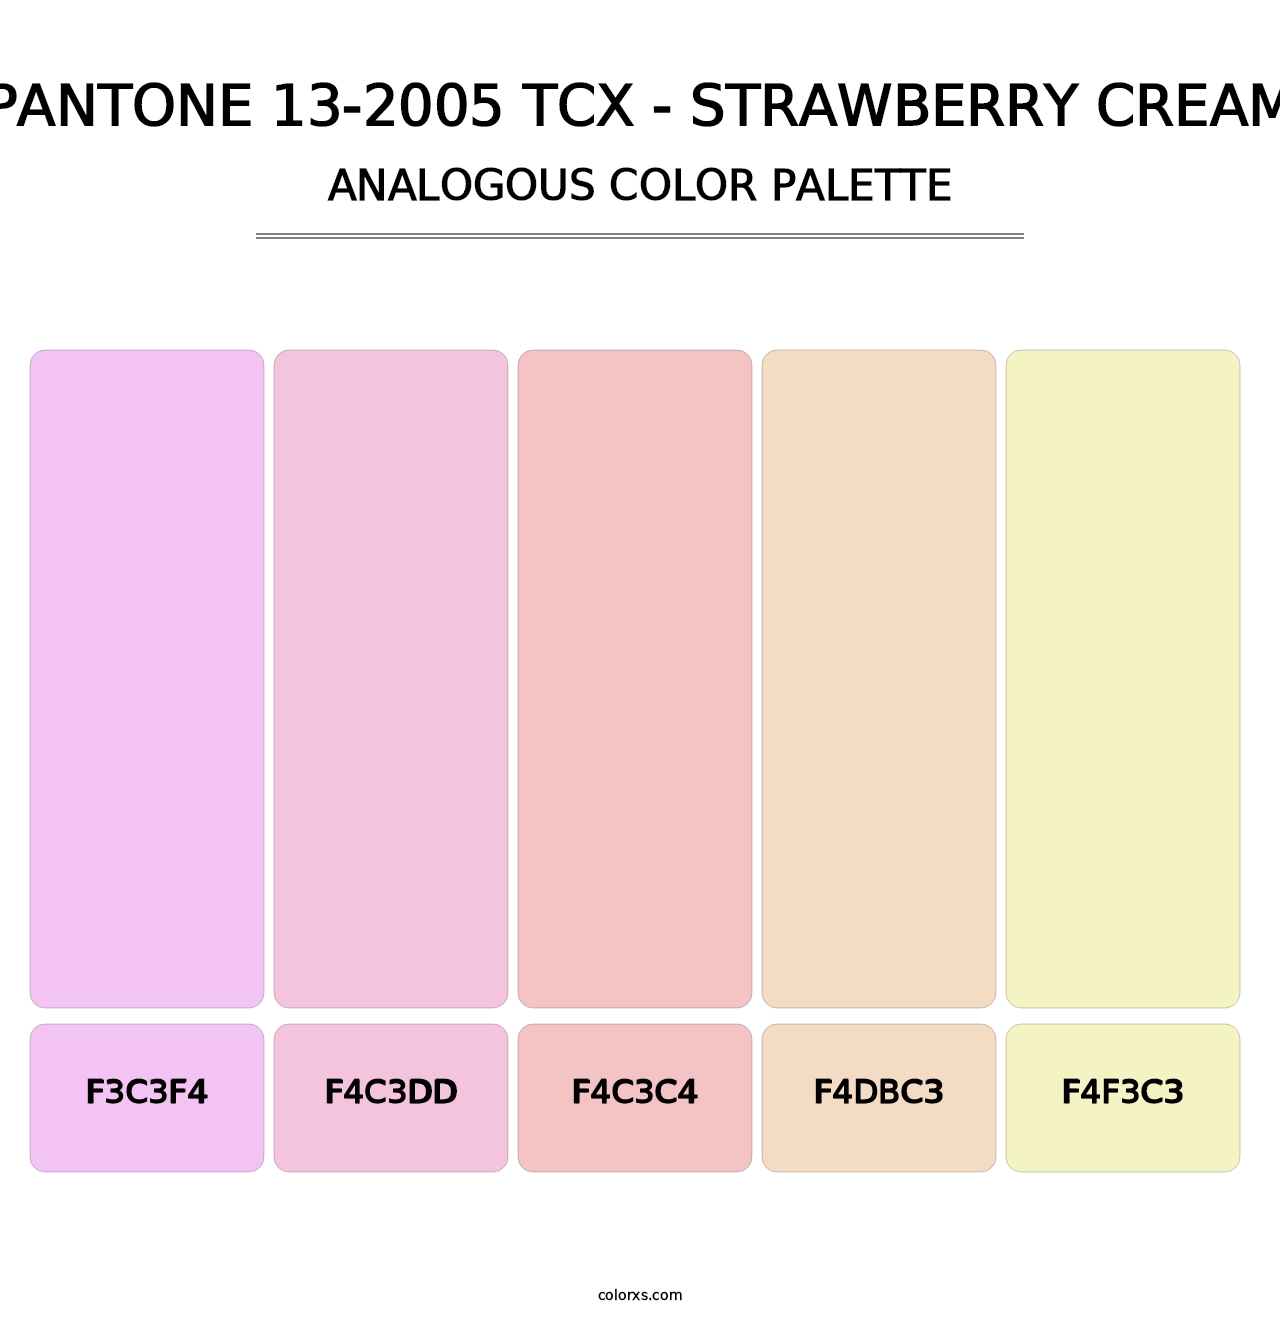 PANTONE 13-2005 TCX - Strawberry Cream - Analogous Color Palette